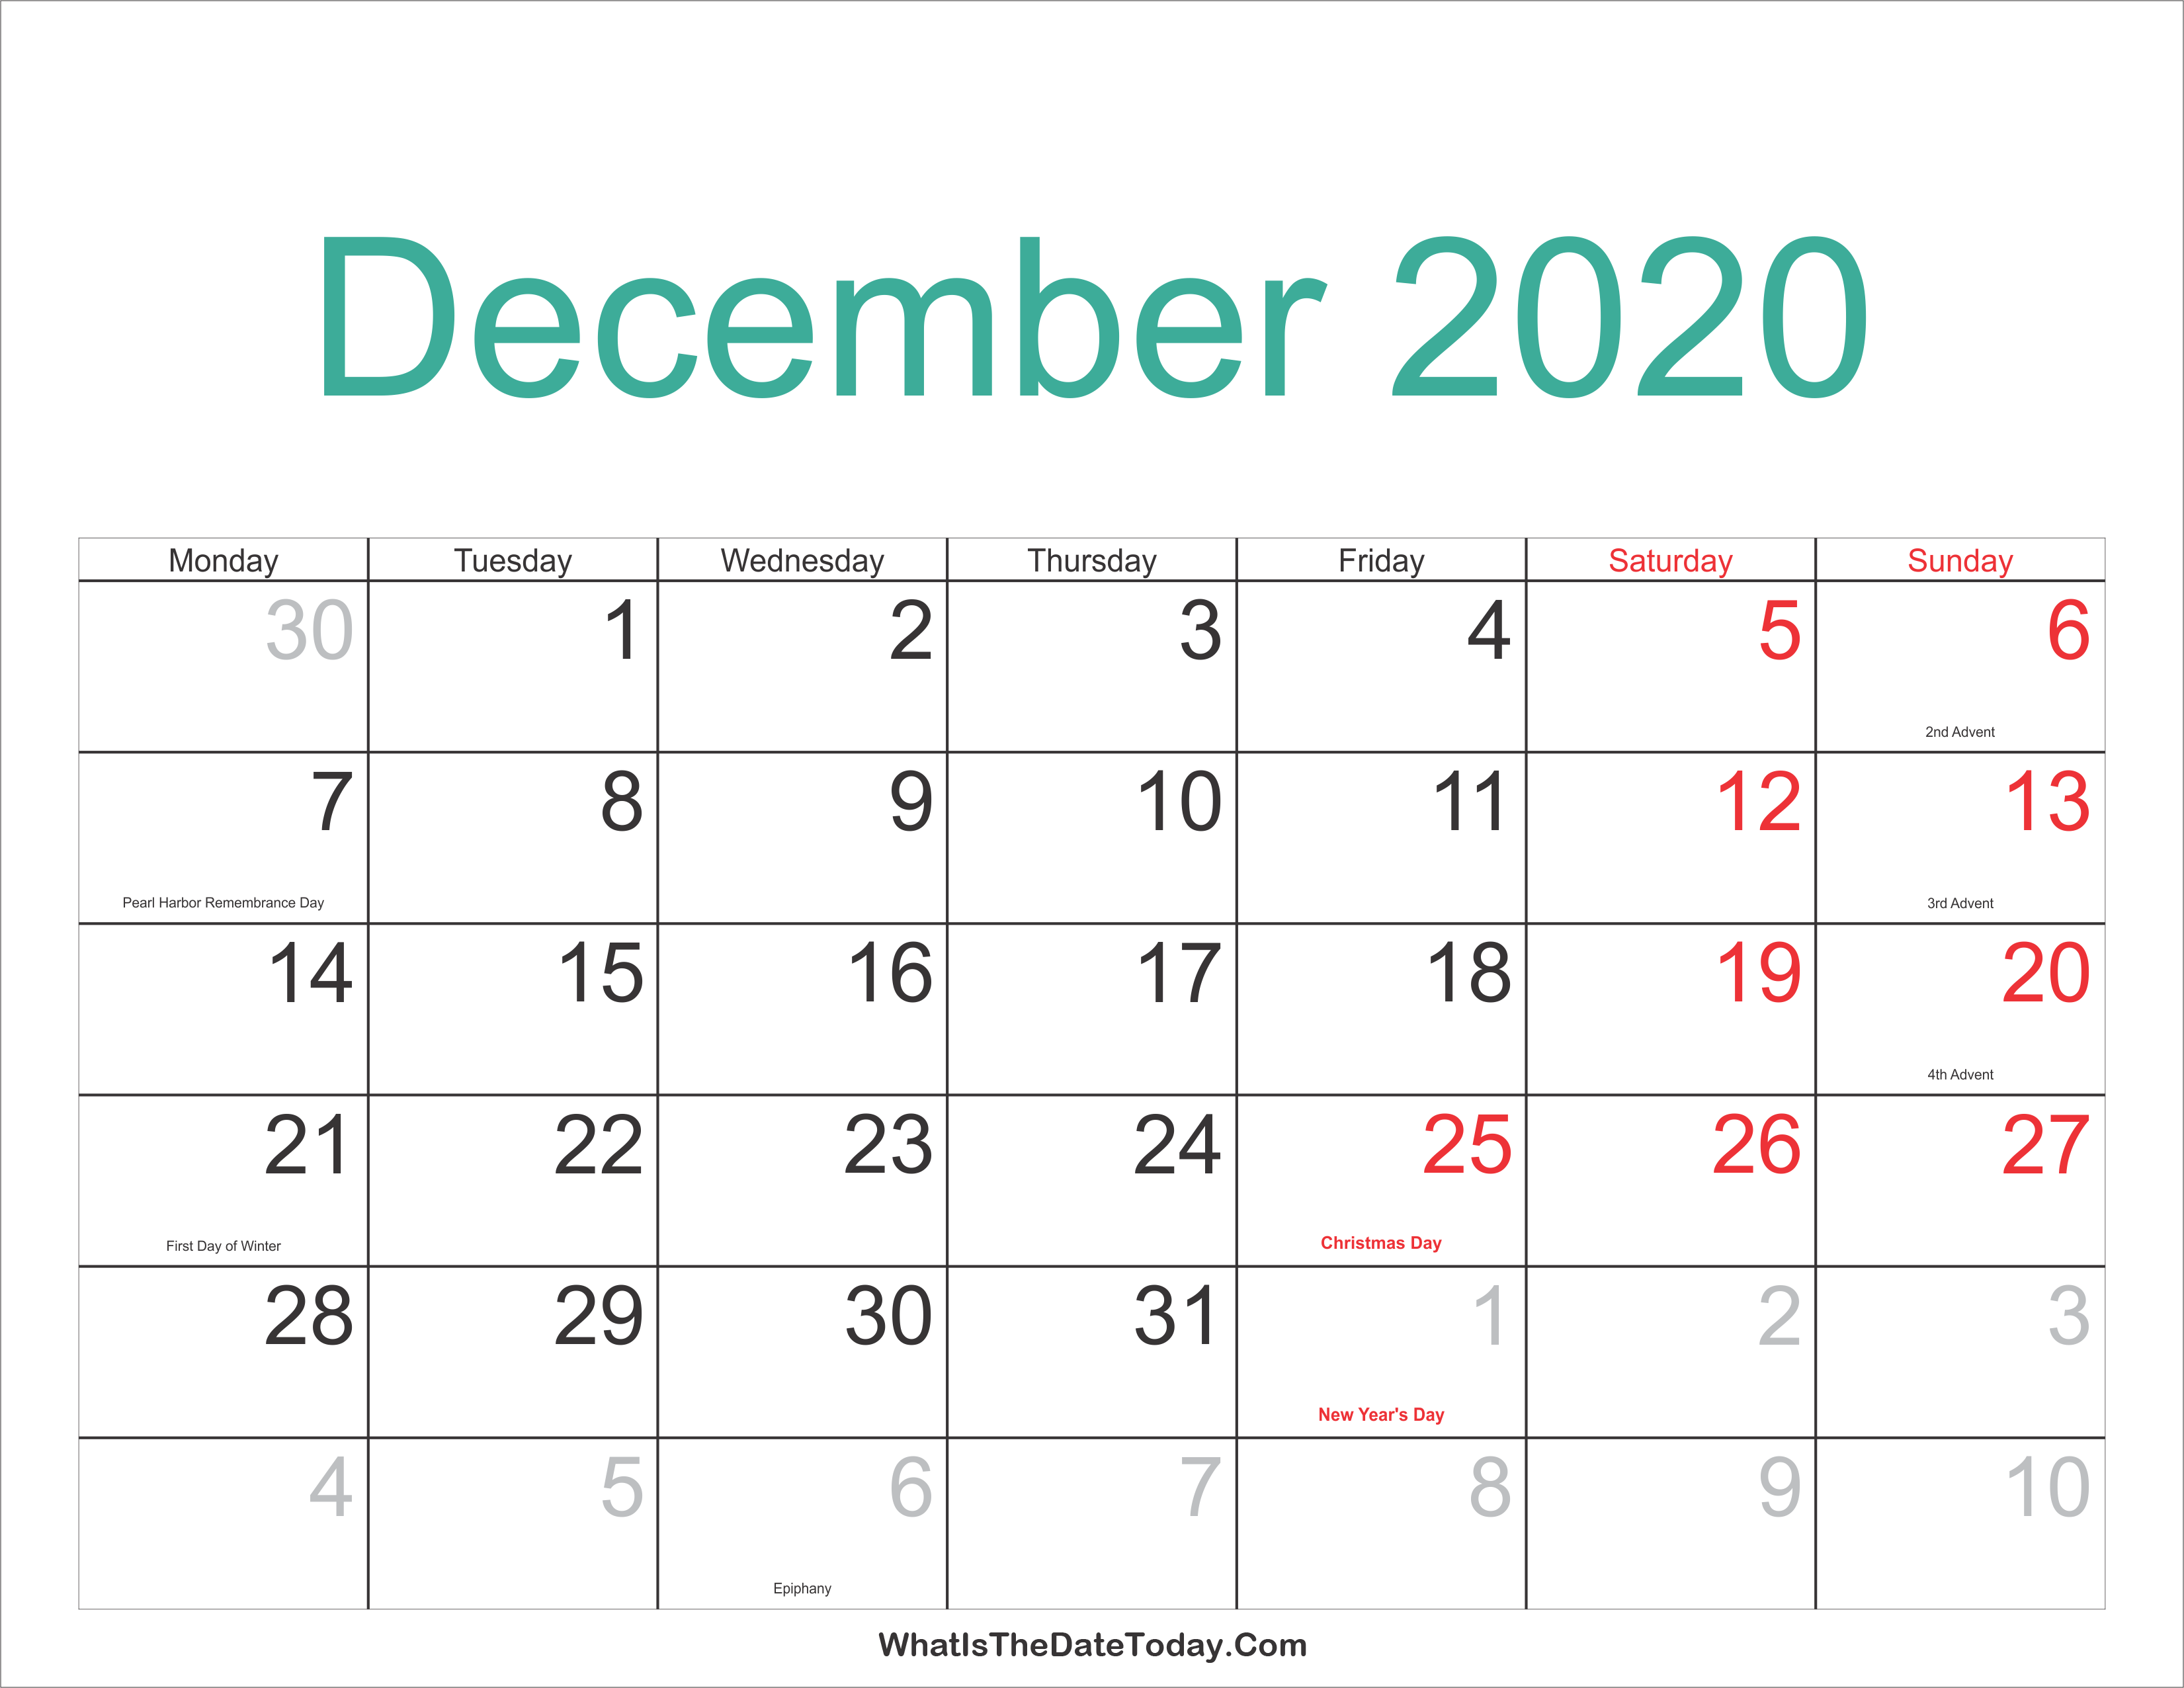 december-2020-calendar-printable-with-holidays-whatisthedatetoday-com